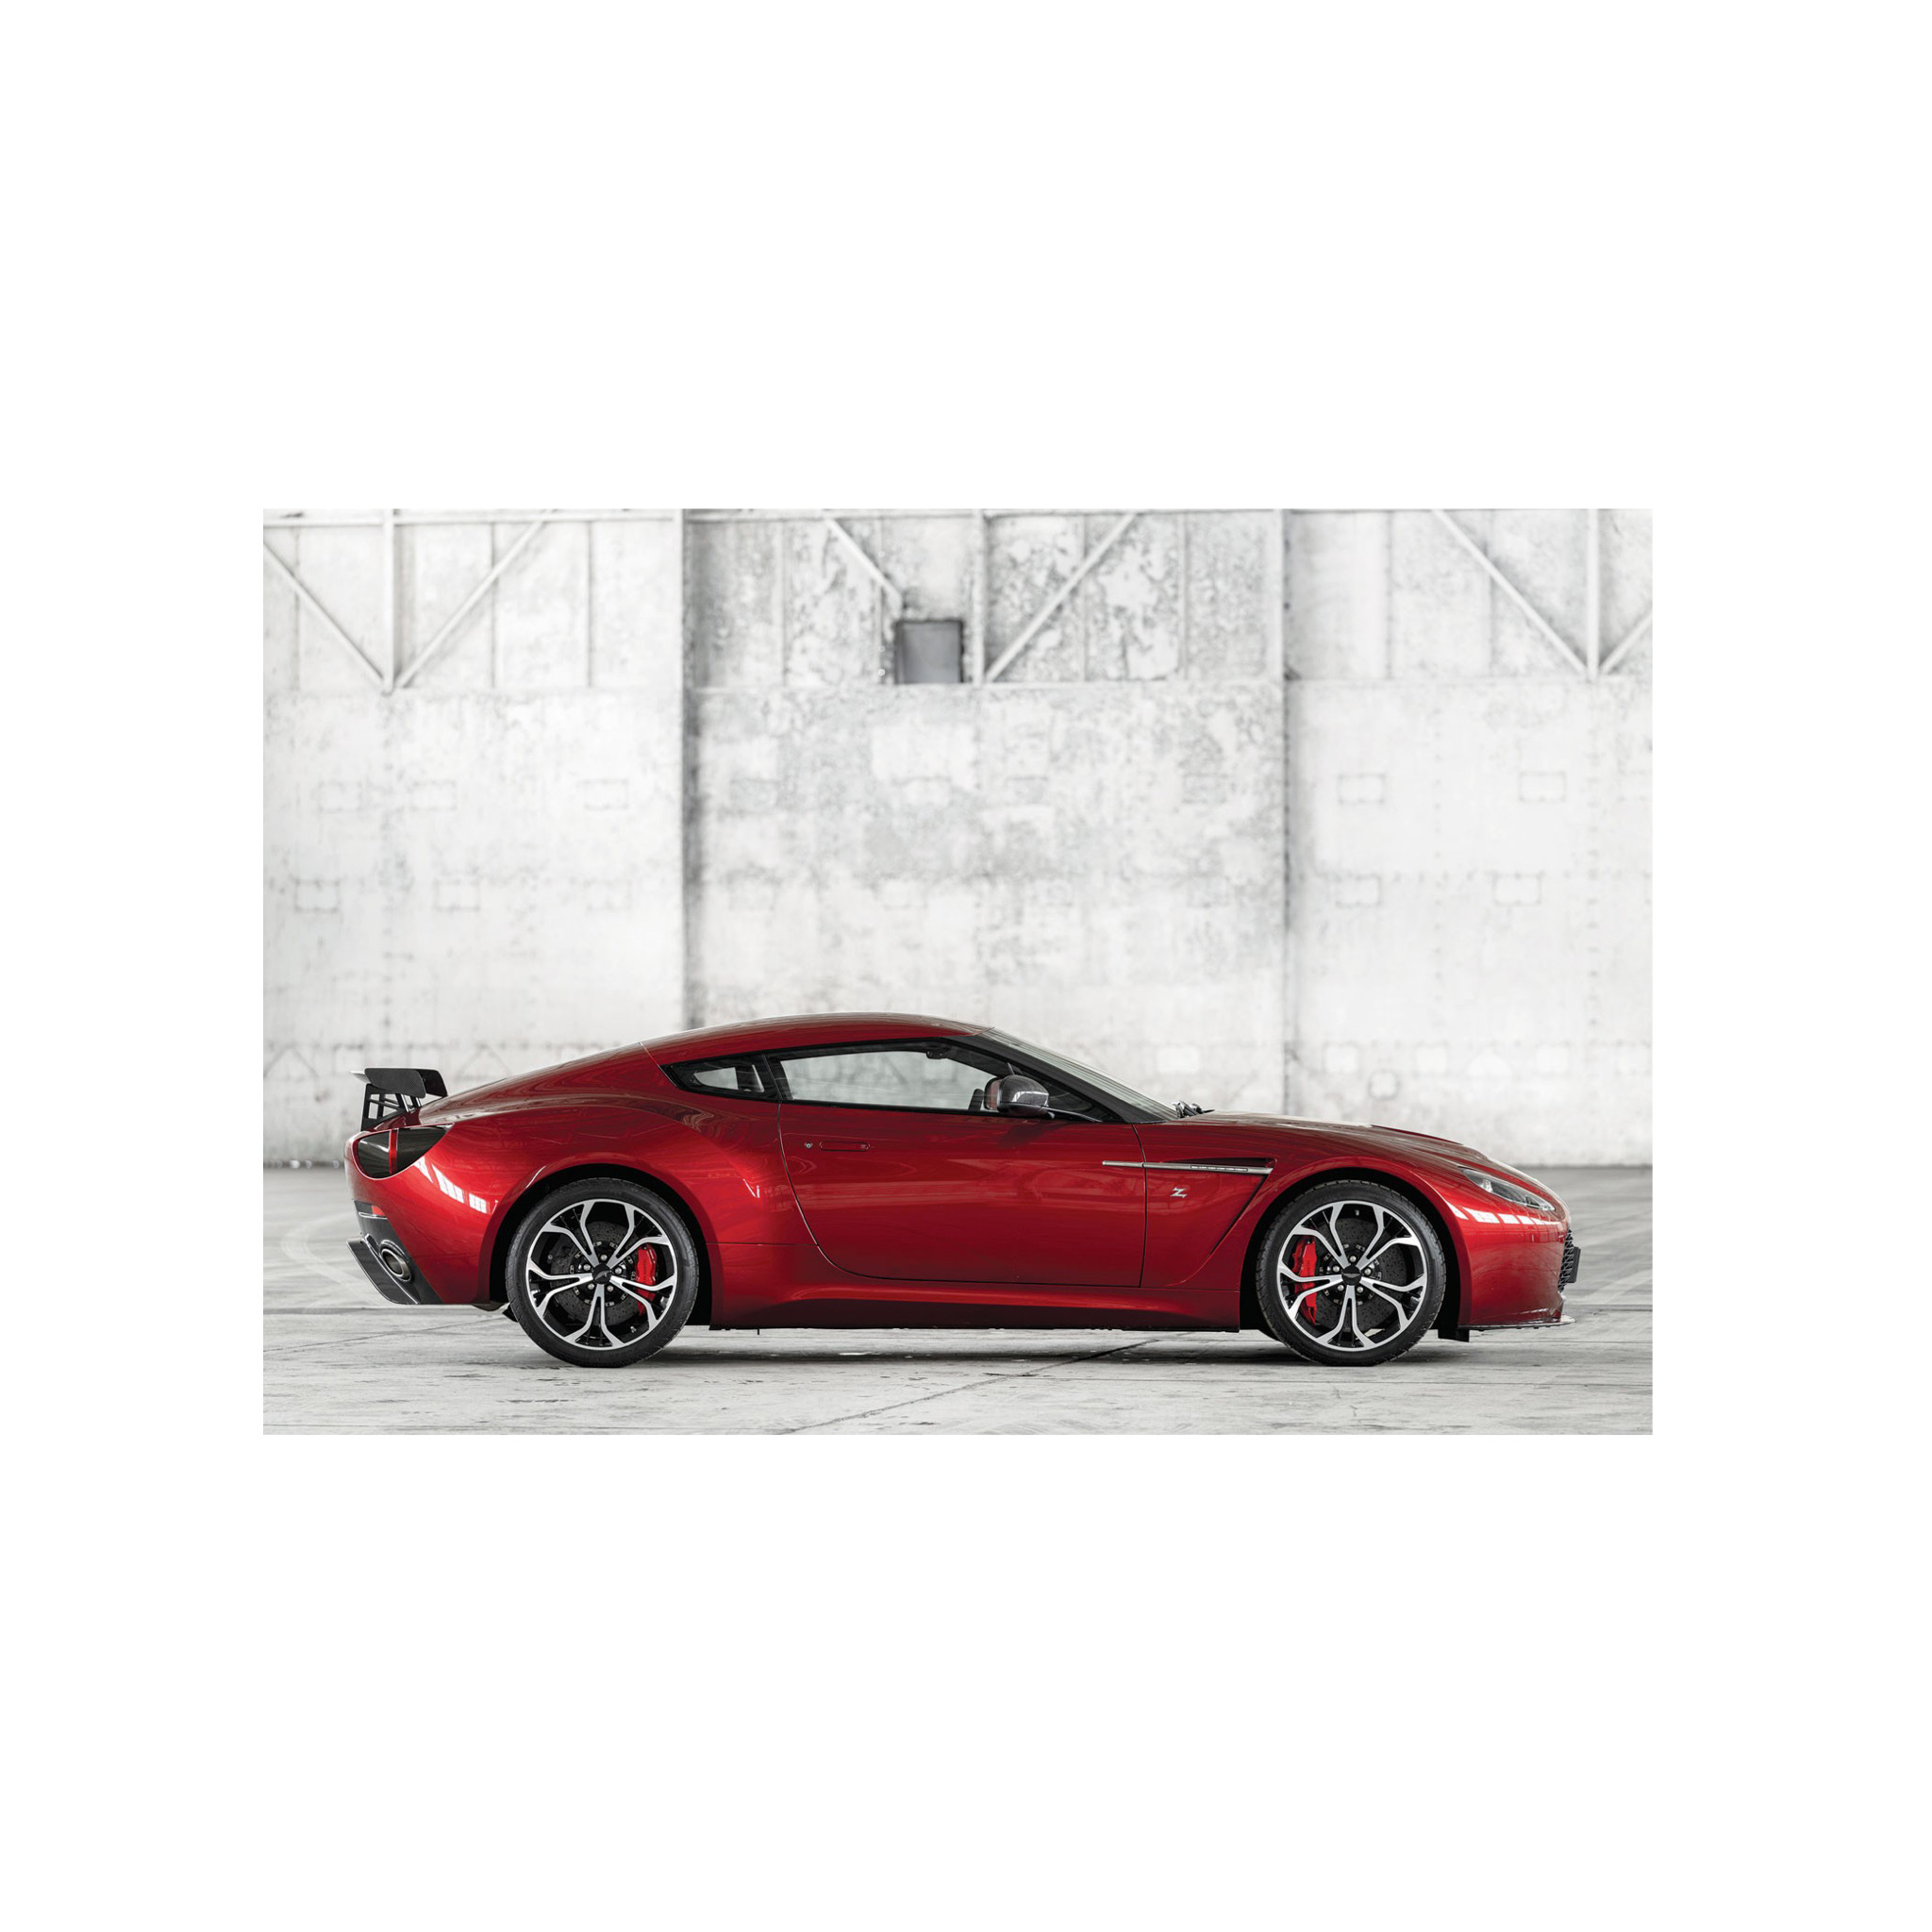 Aston Martin: State Of The Art Vantage Sports Car